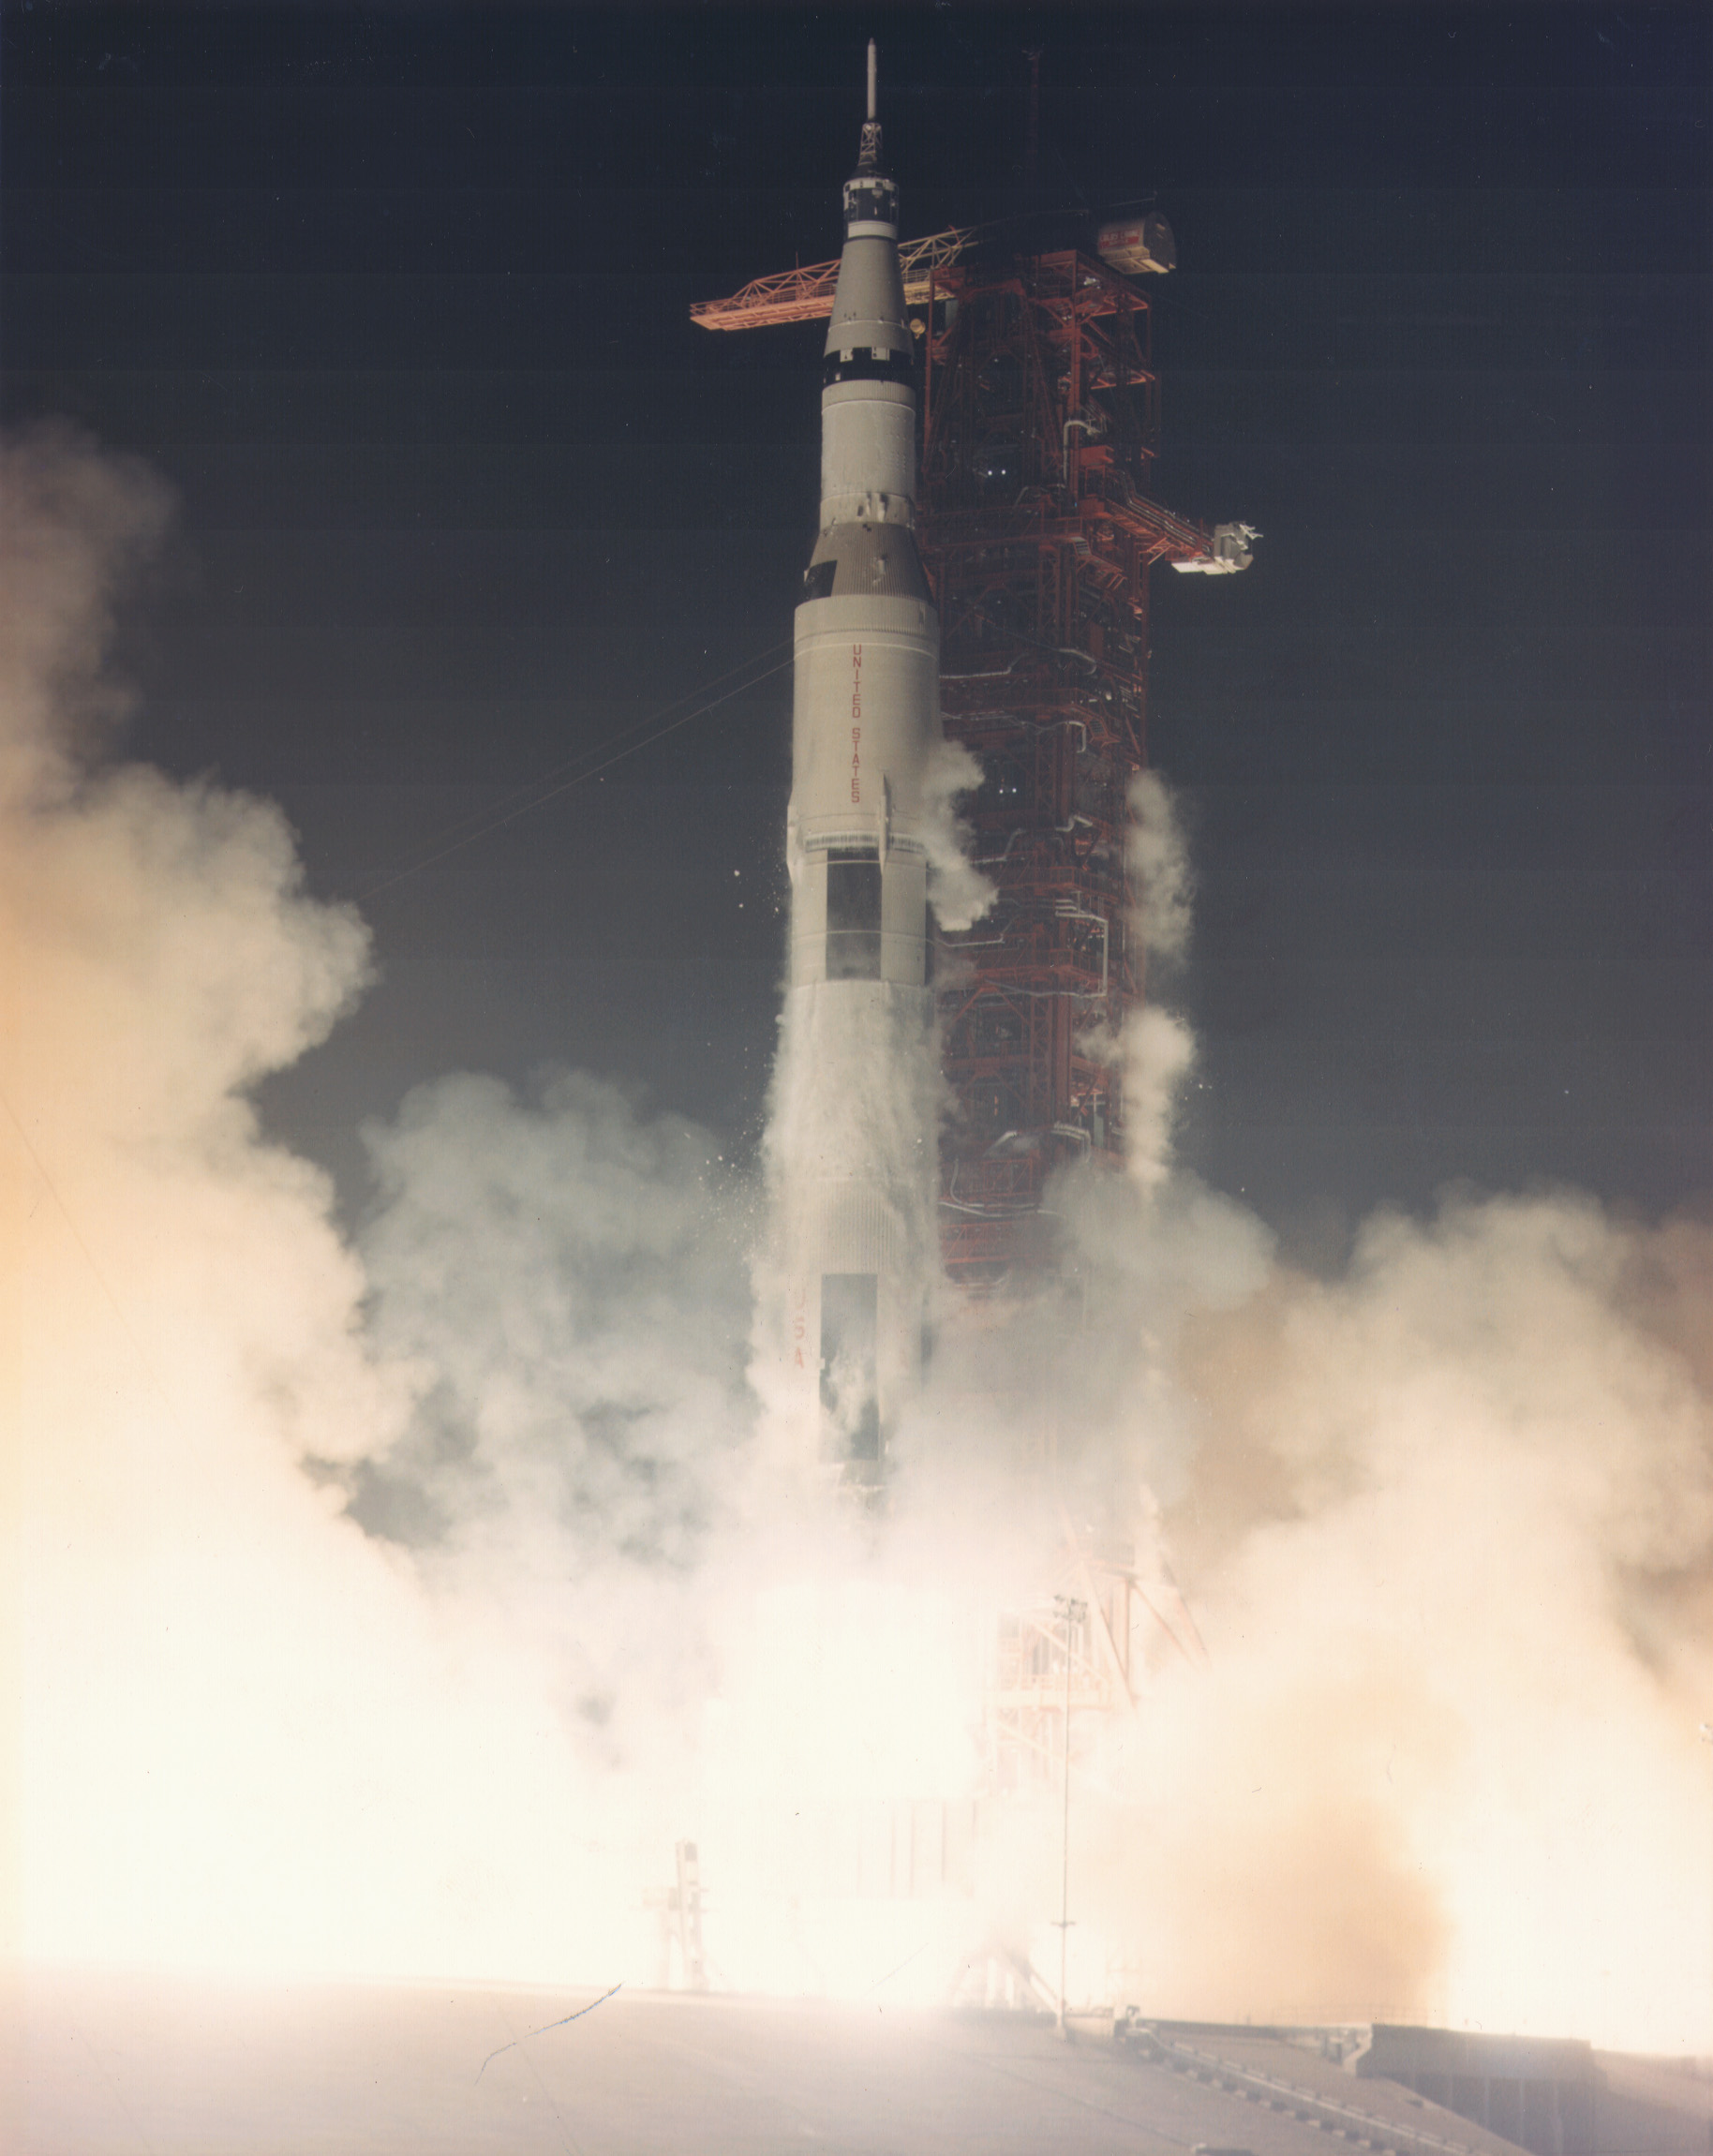 The Final Apollo Mission – December 7, 1972